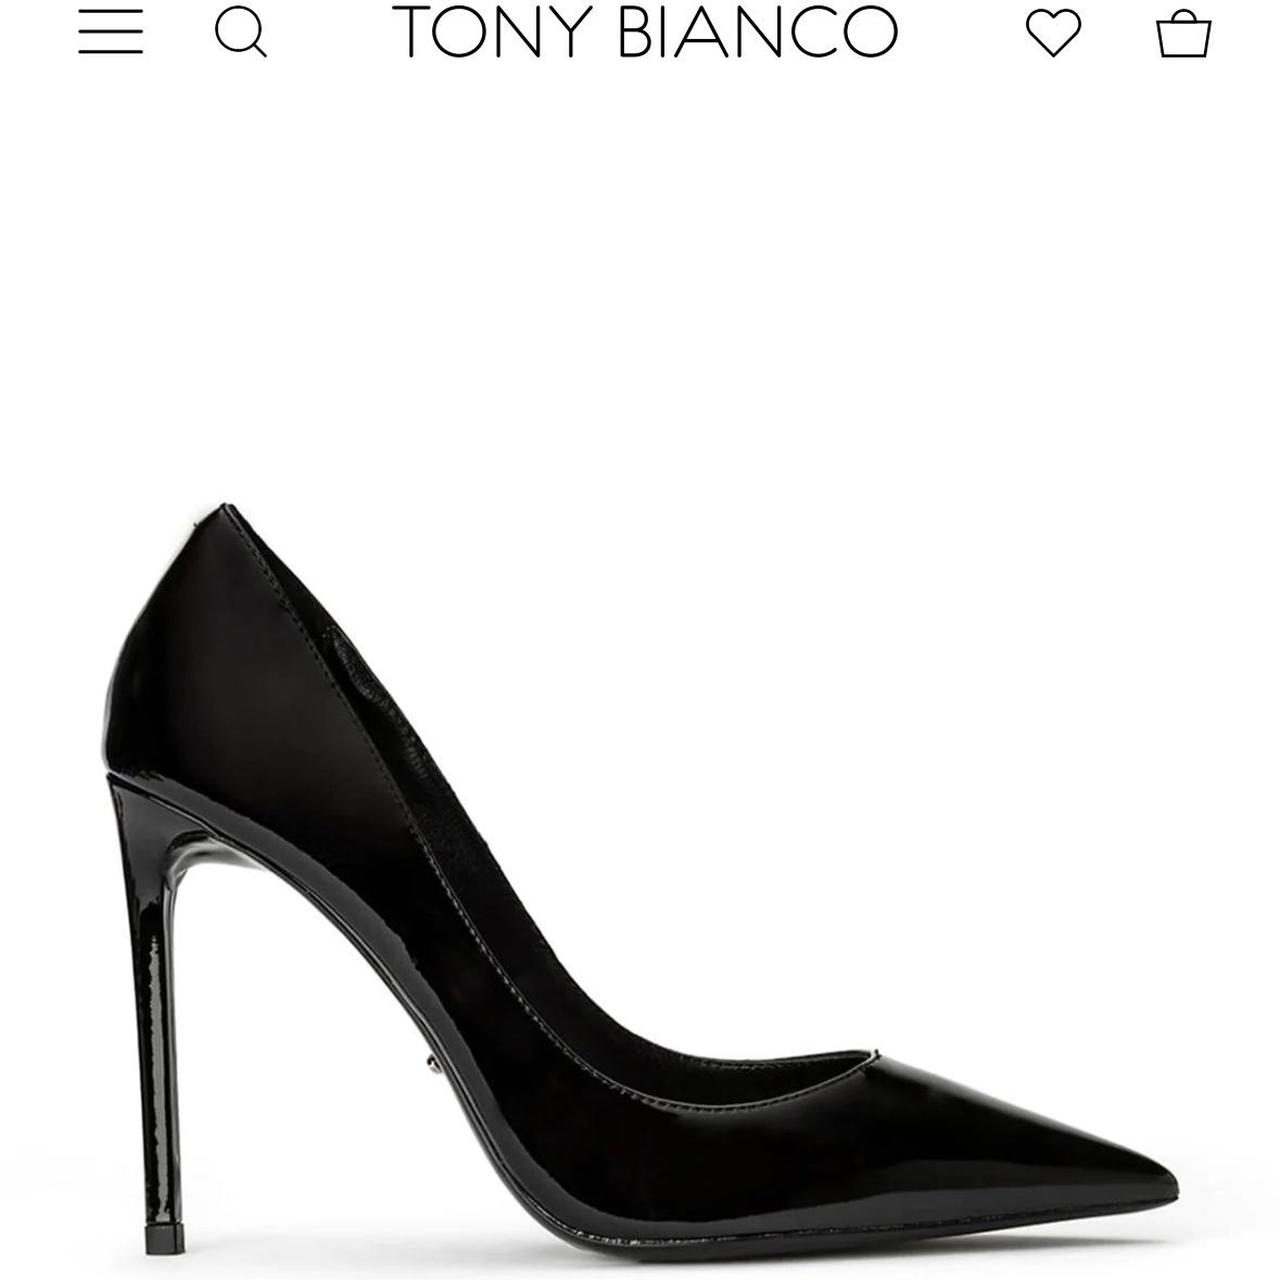 Tony Bianco Anja black patent pointed heels 👠 Size... - Depop